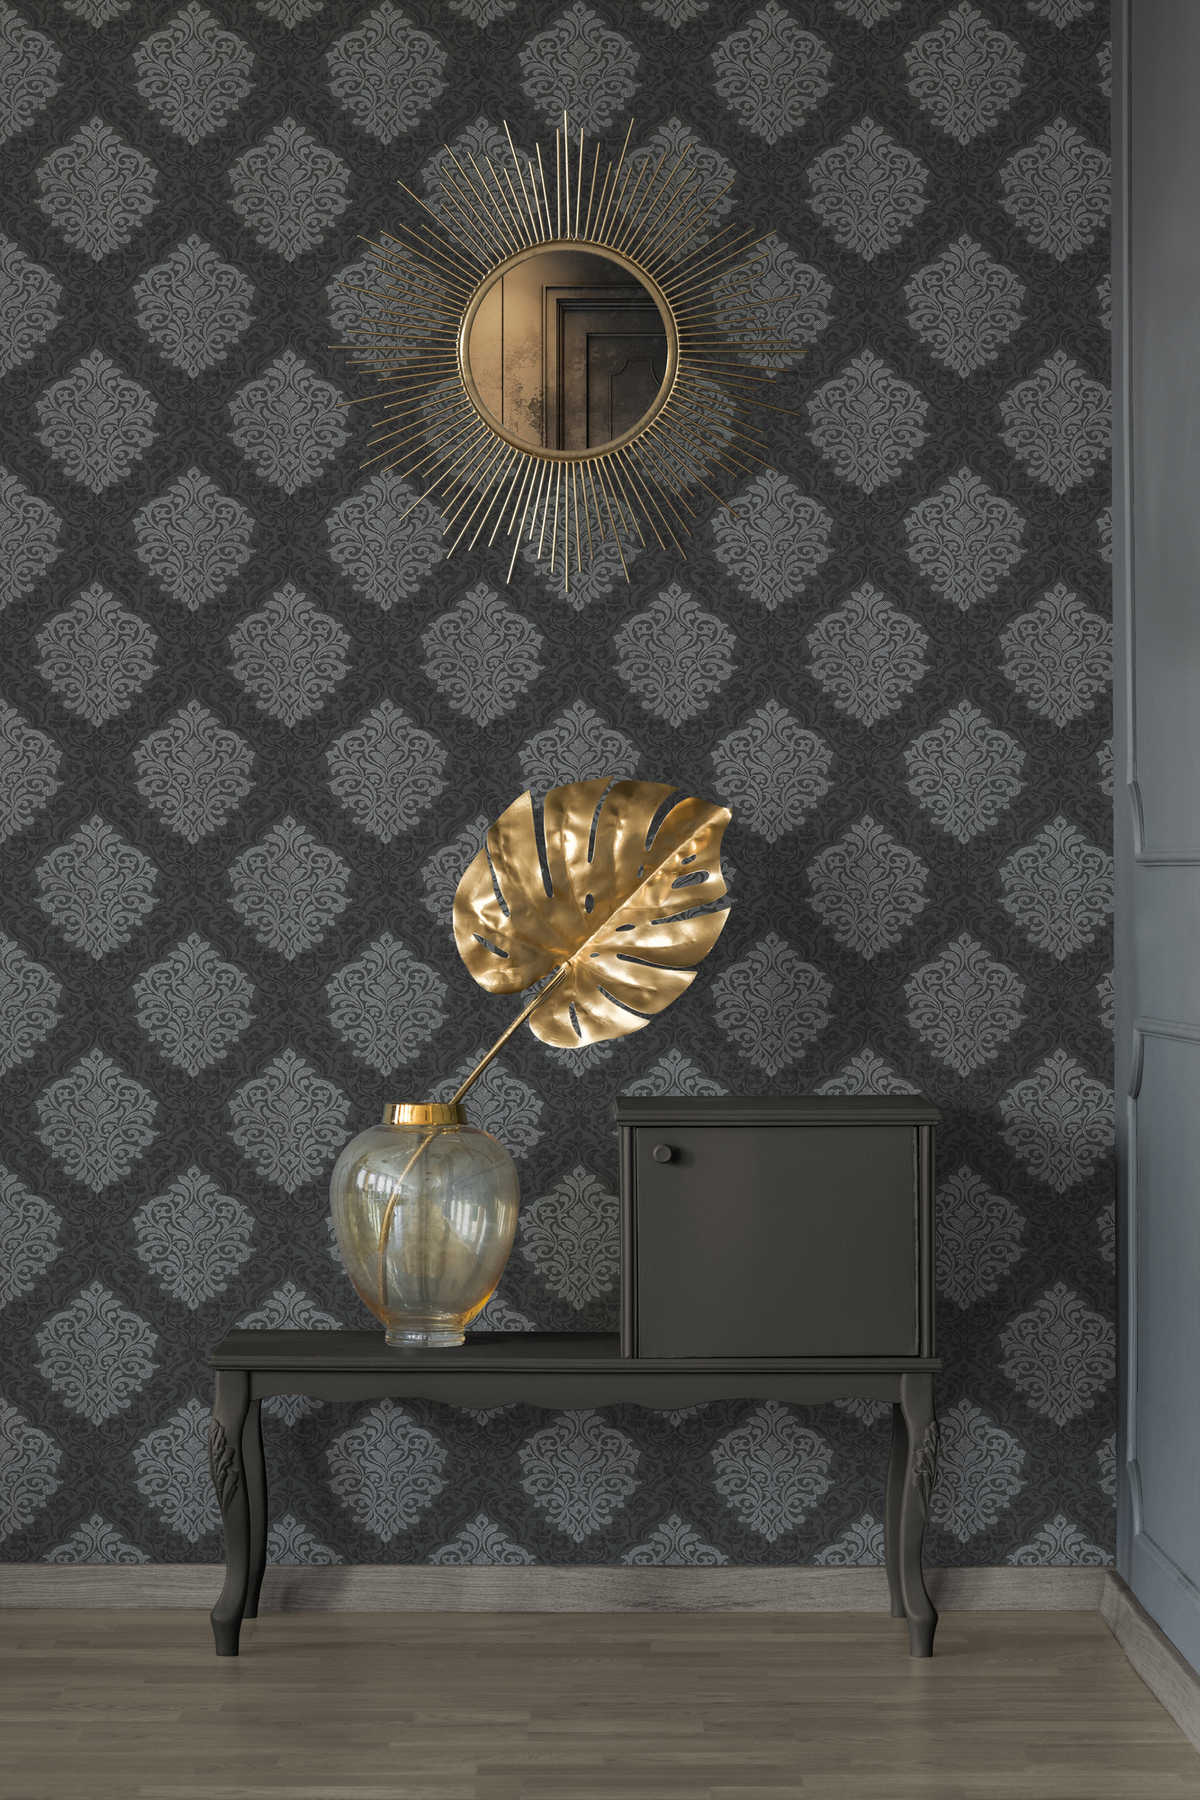             Floral ornamental wallpaper diamond pattern in ethnic style - silver, black, grey
        